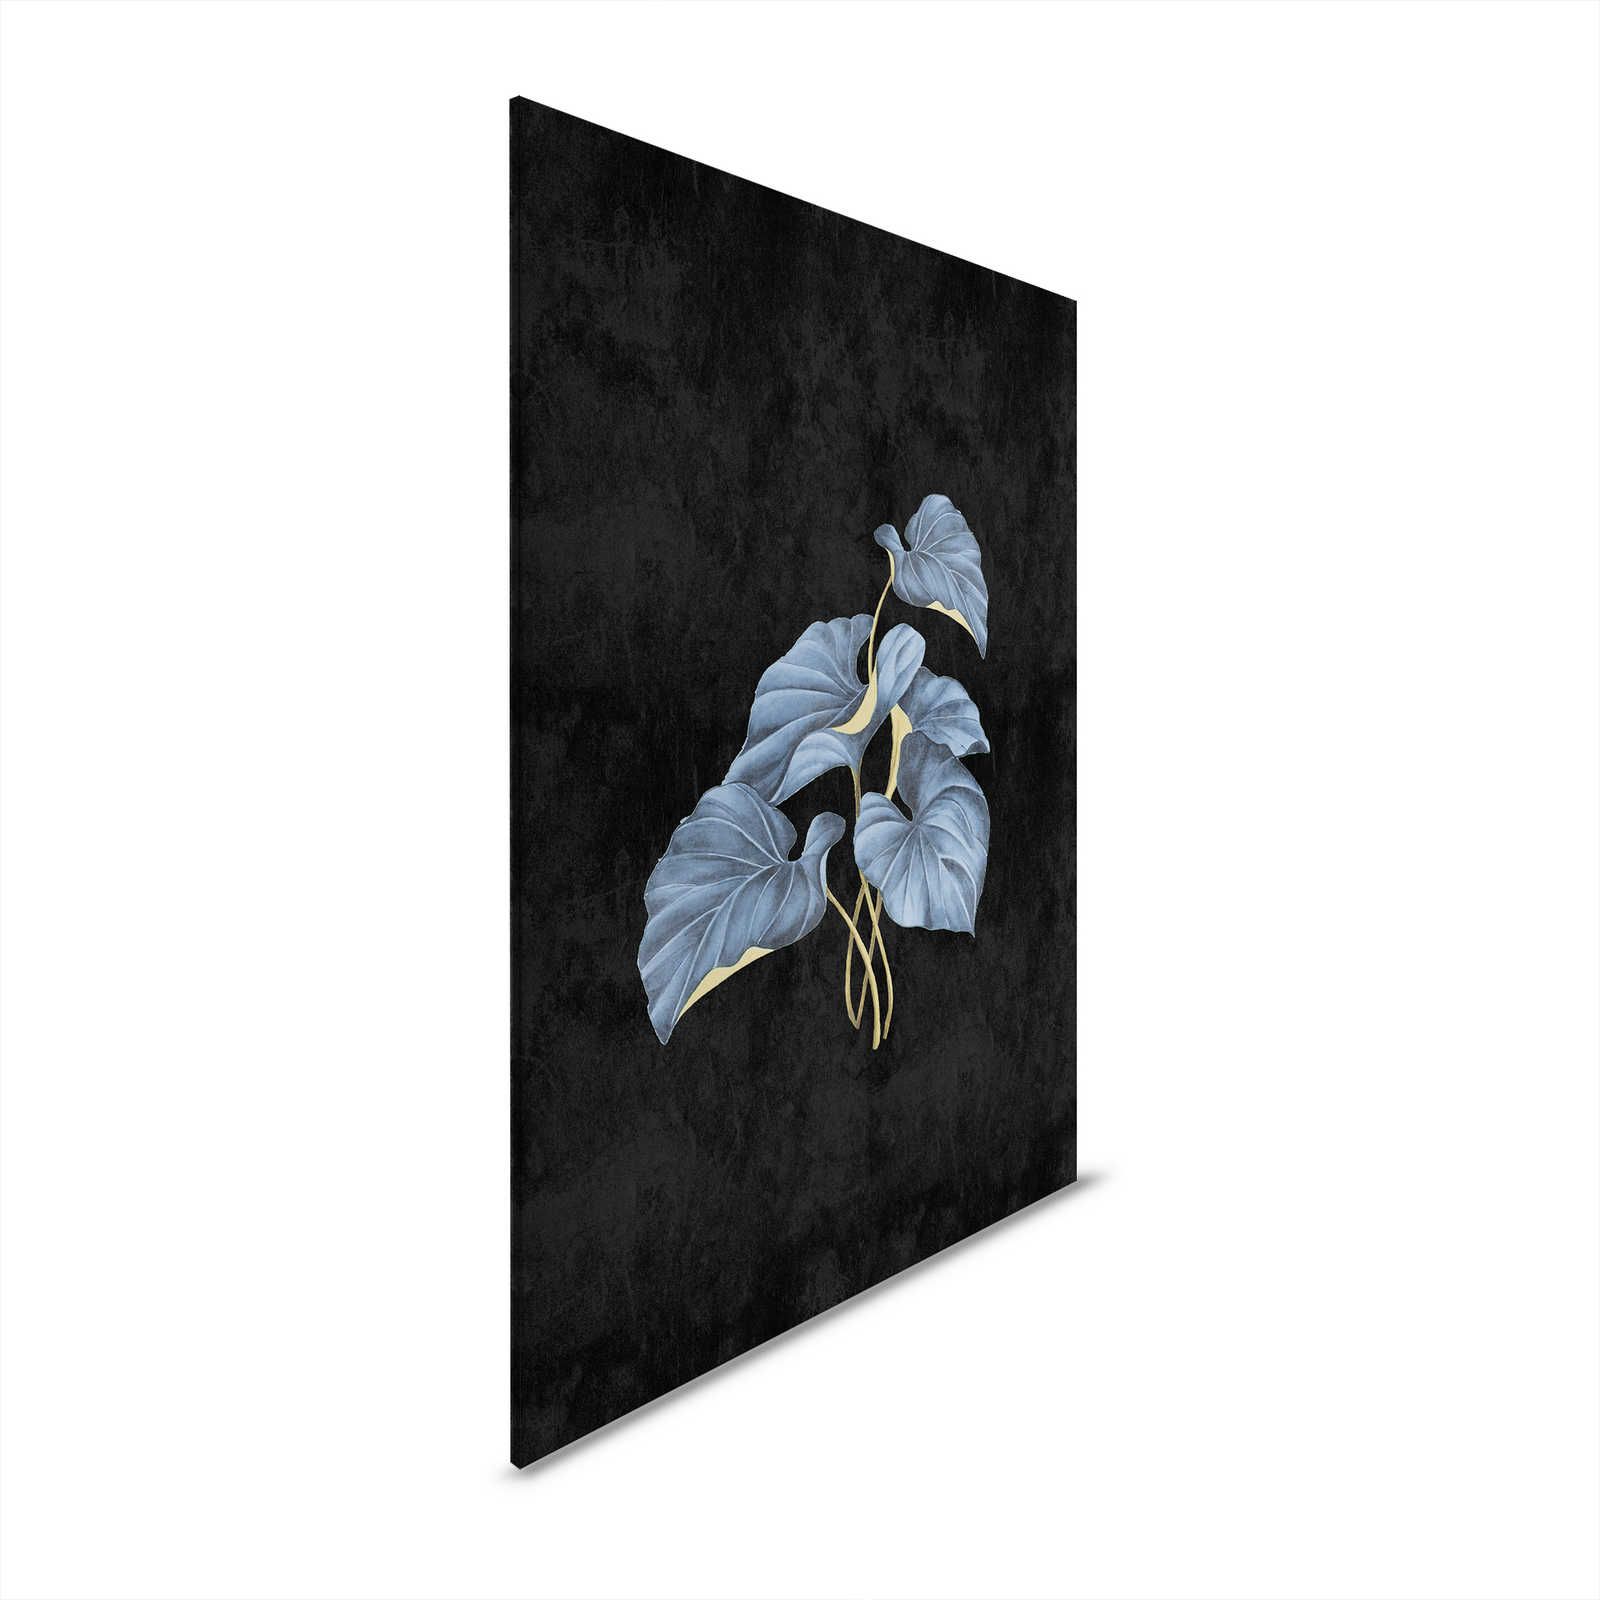 Fiji 1 - Pintura sobre lienzo negro Hojas azules con acento dorado - 0,60 m x 0,90 m
